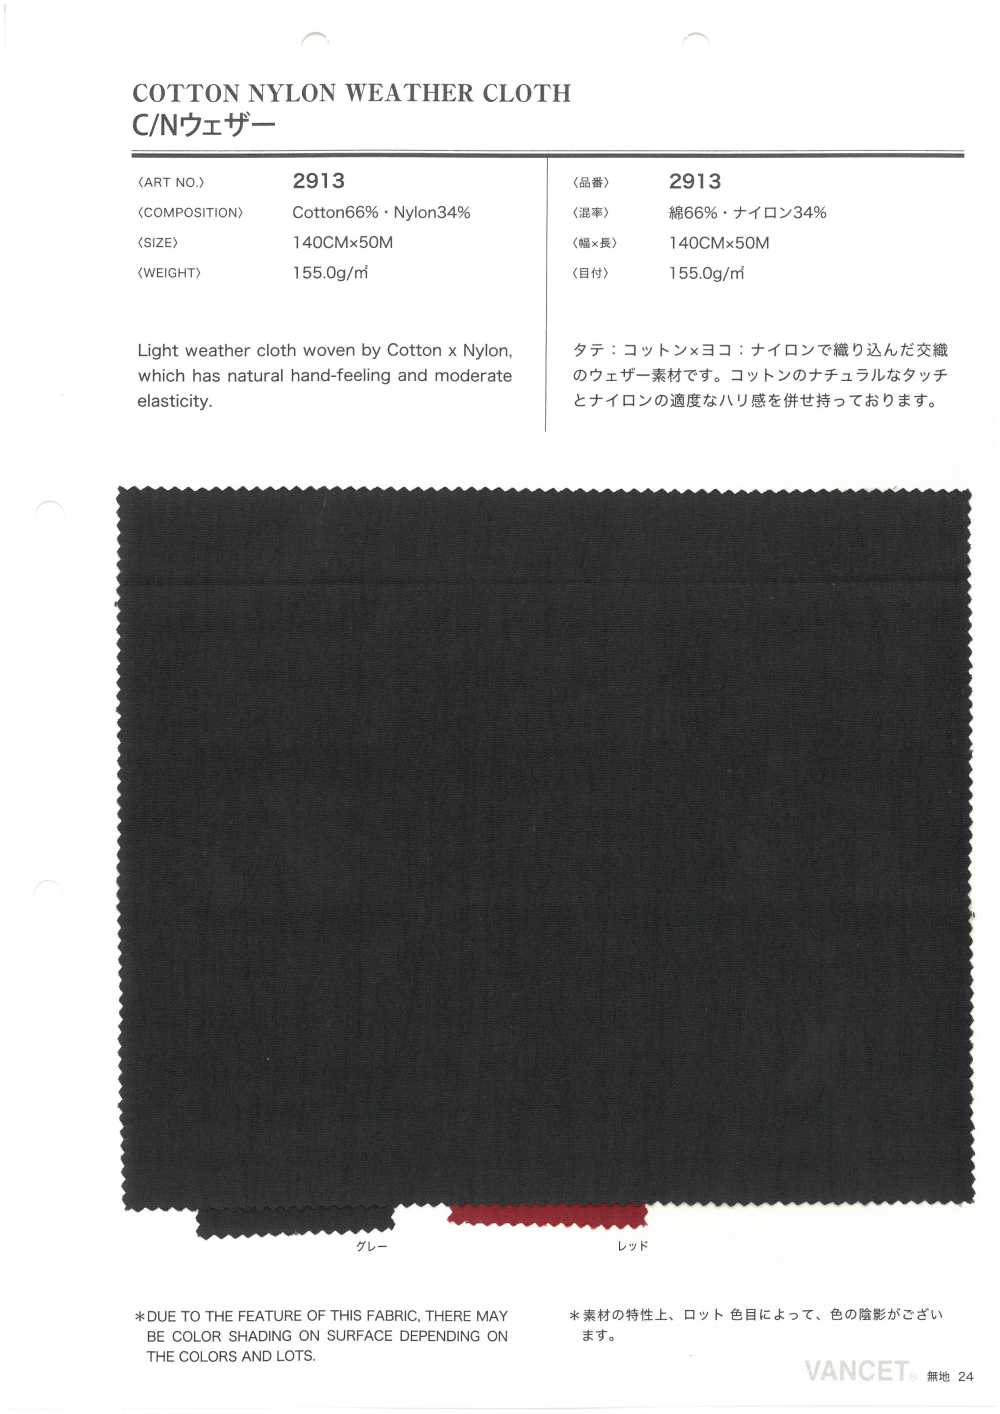 2913 C/N Weather Cloth[Textile / Fabric] VANCET